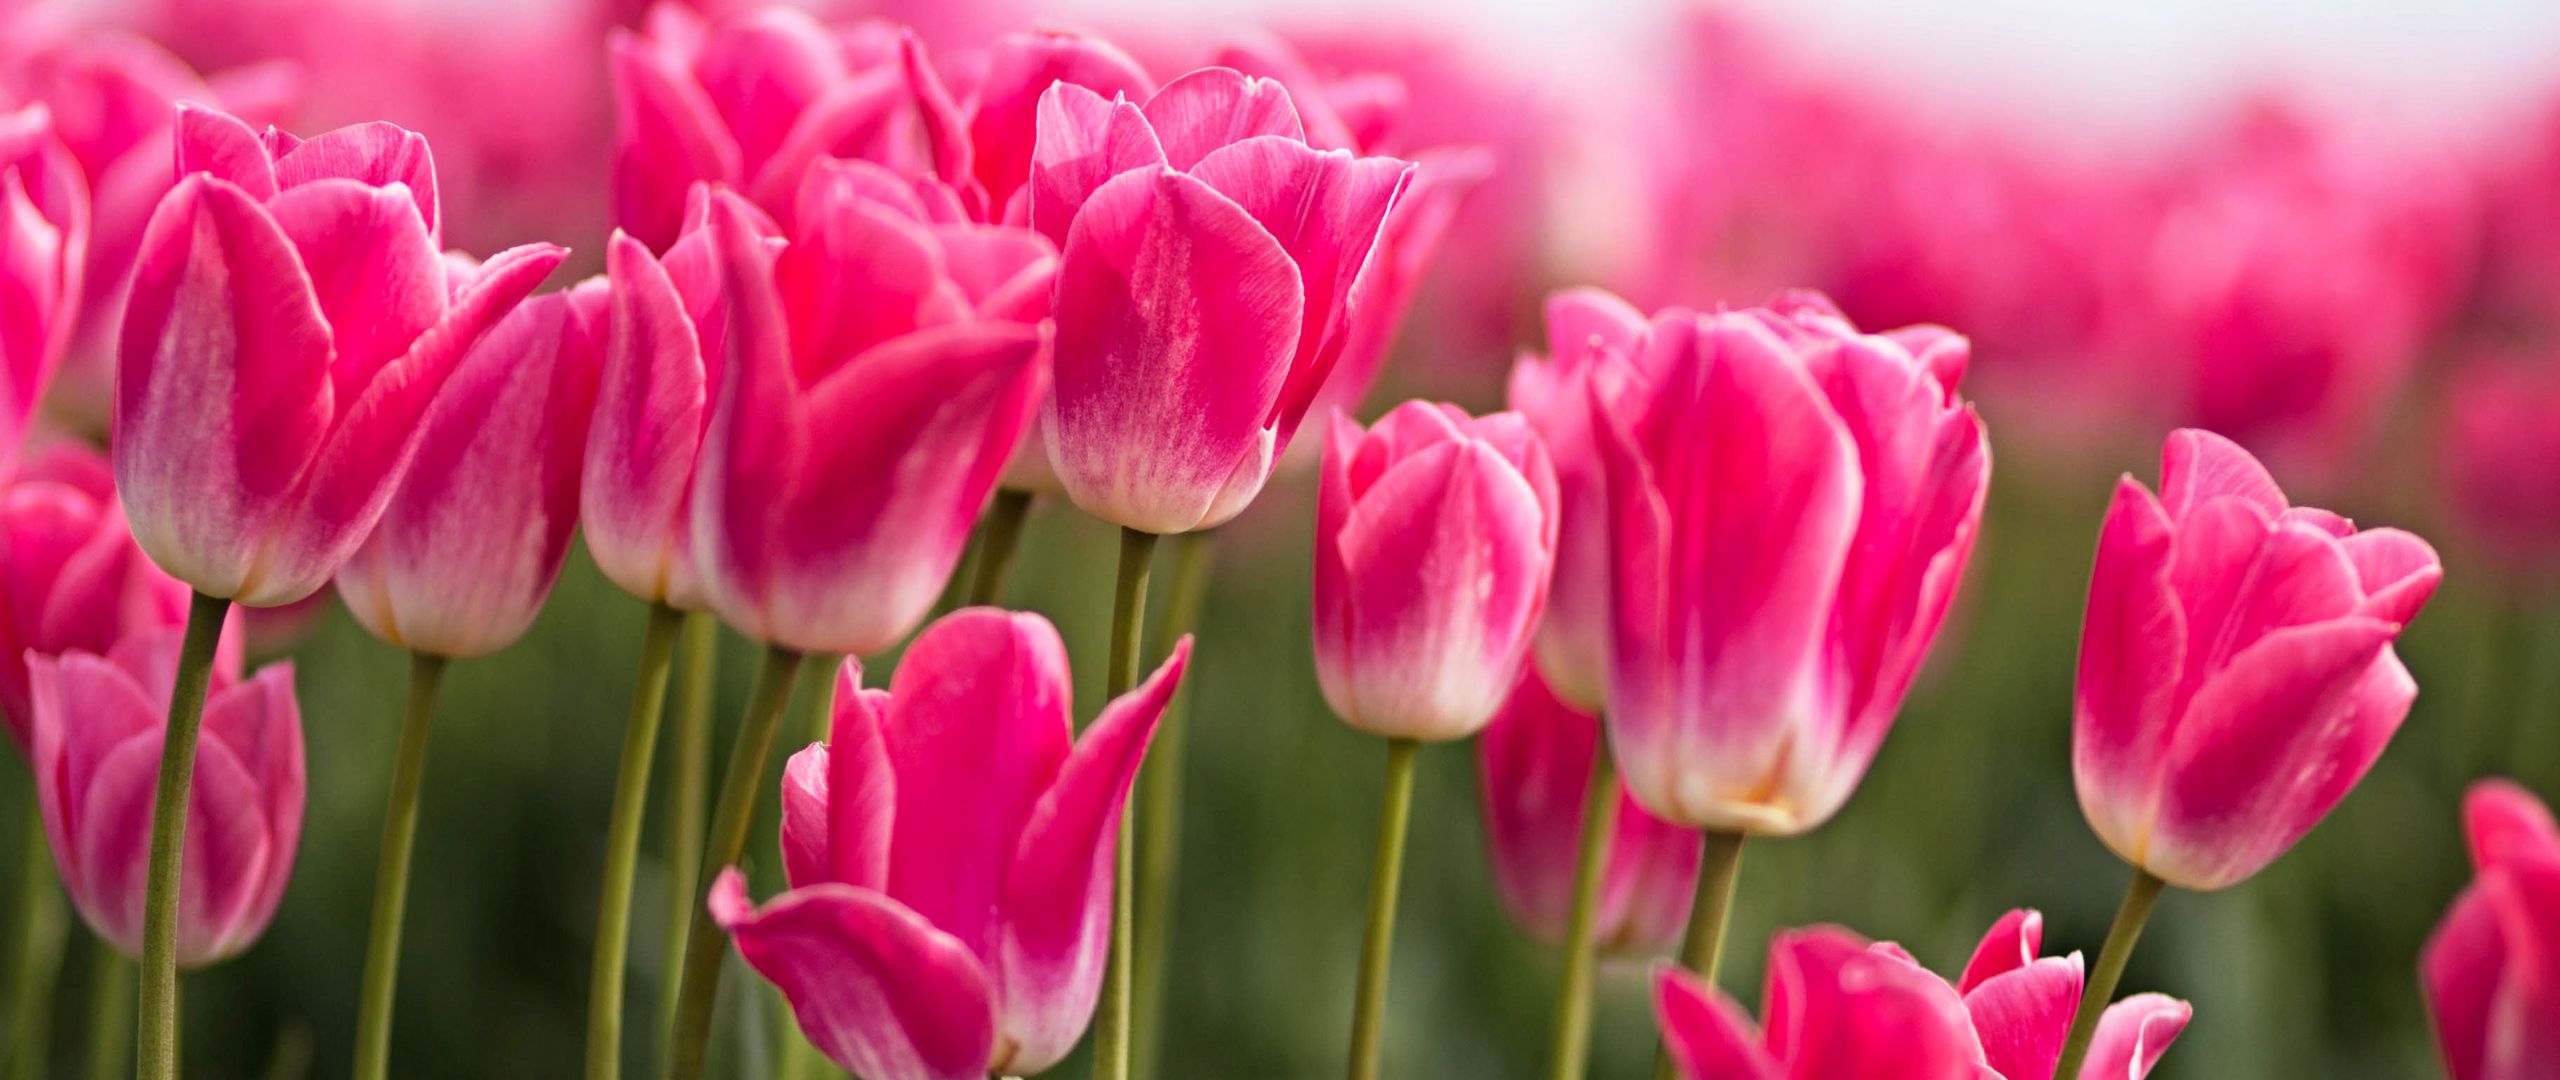 Fondos de pantalla Tulipanes rosas